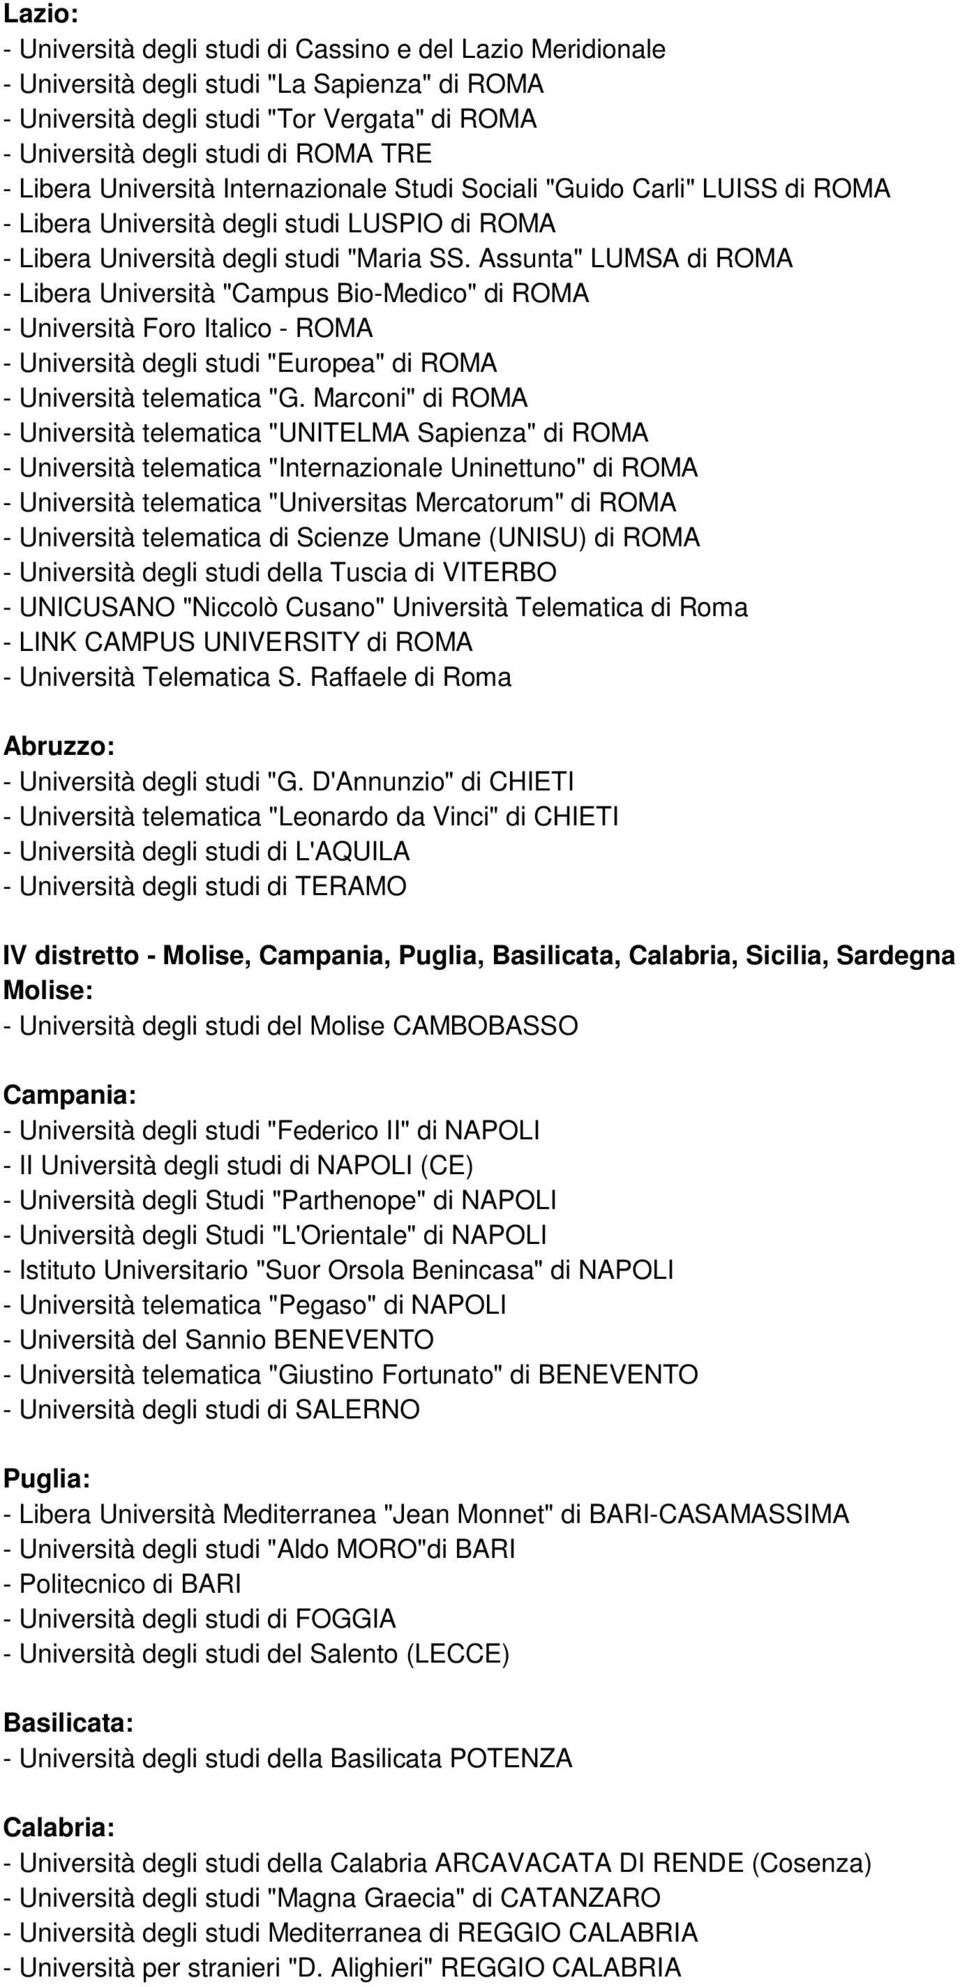 Assunta" LUMSA di ROMA - Libera Università "Campus Bio-Medico" di ROMA - Università Foro Italico - ROMA - Università degli studi "Europea" di ROMA - Università telematica "G.